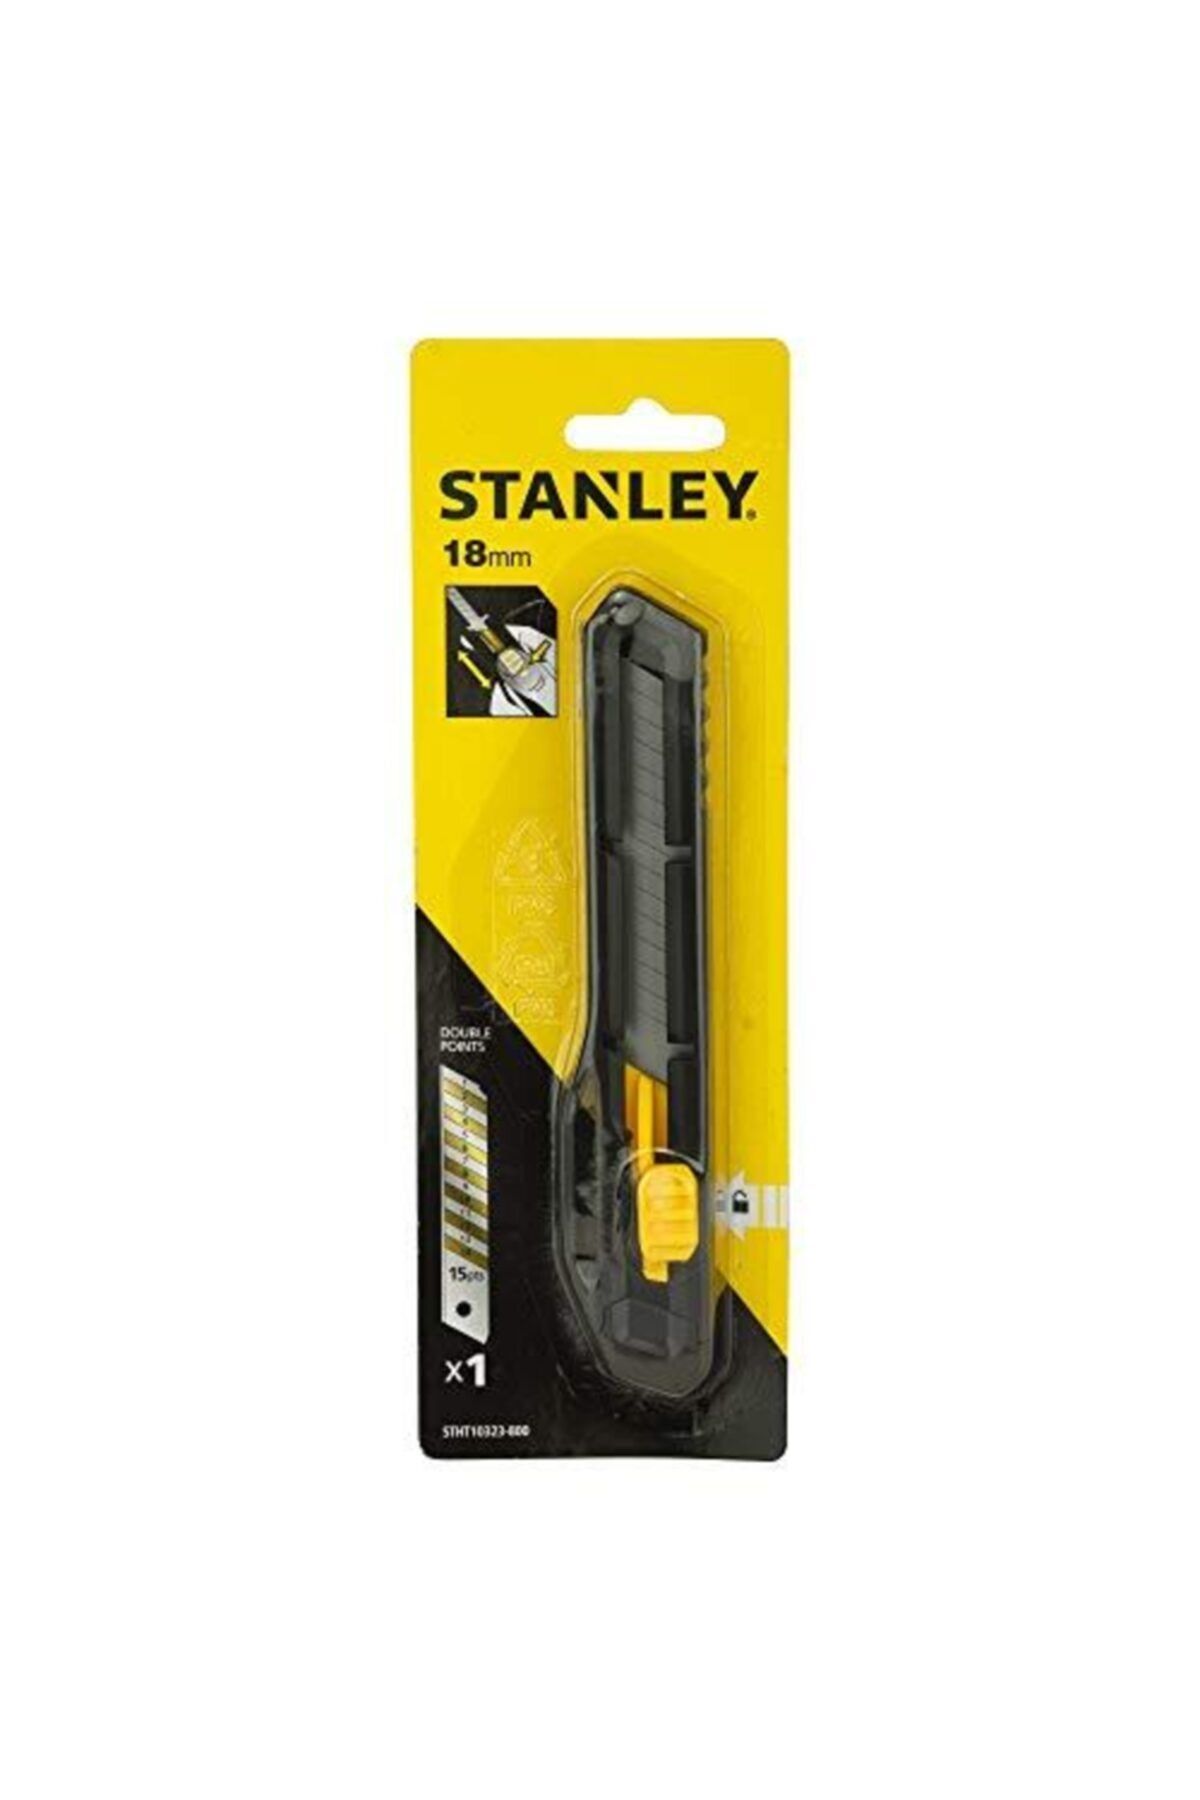 Stanley 18mm Plastik Maket Bıçağı Stht10323-800